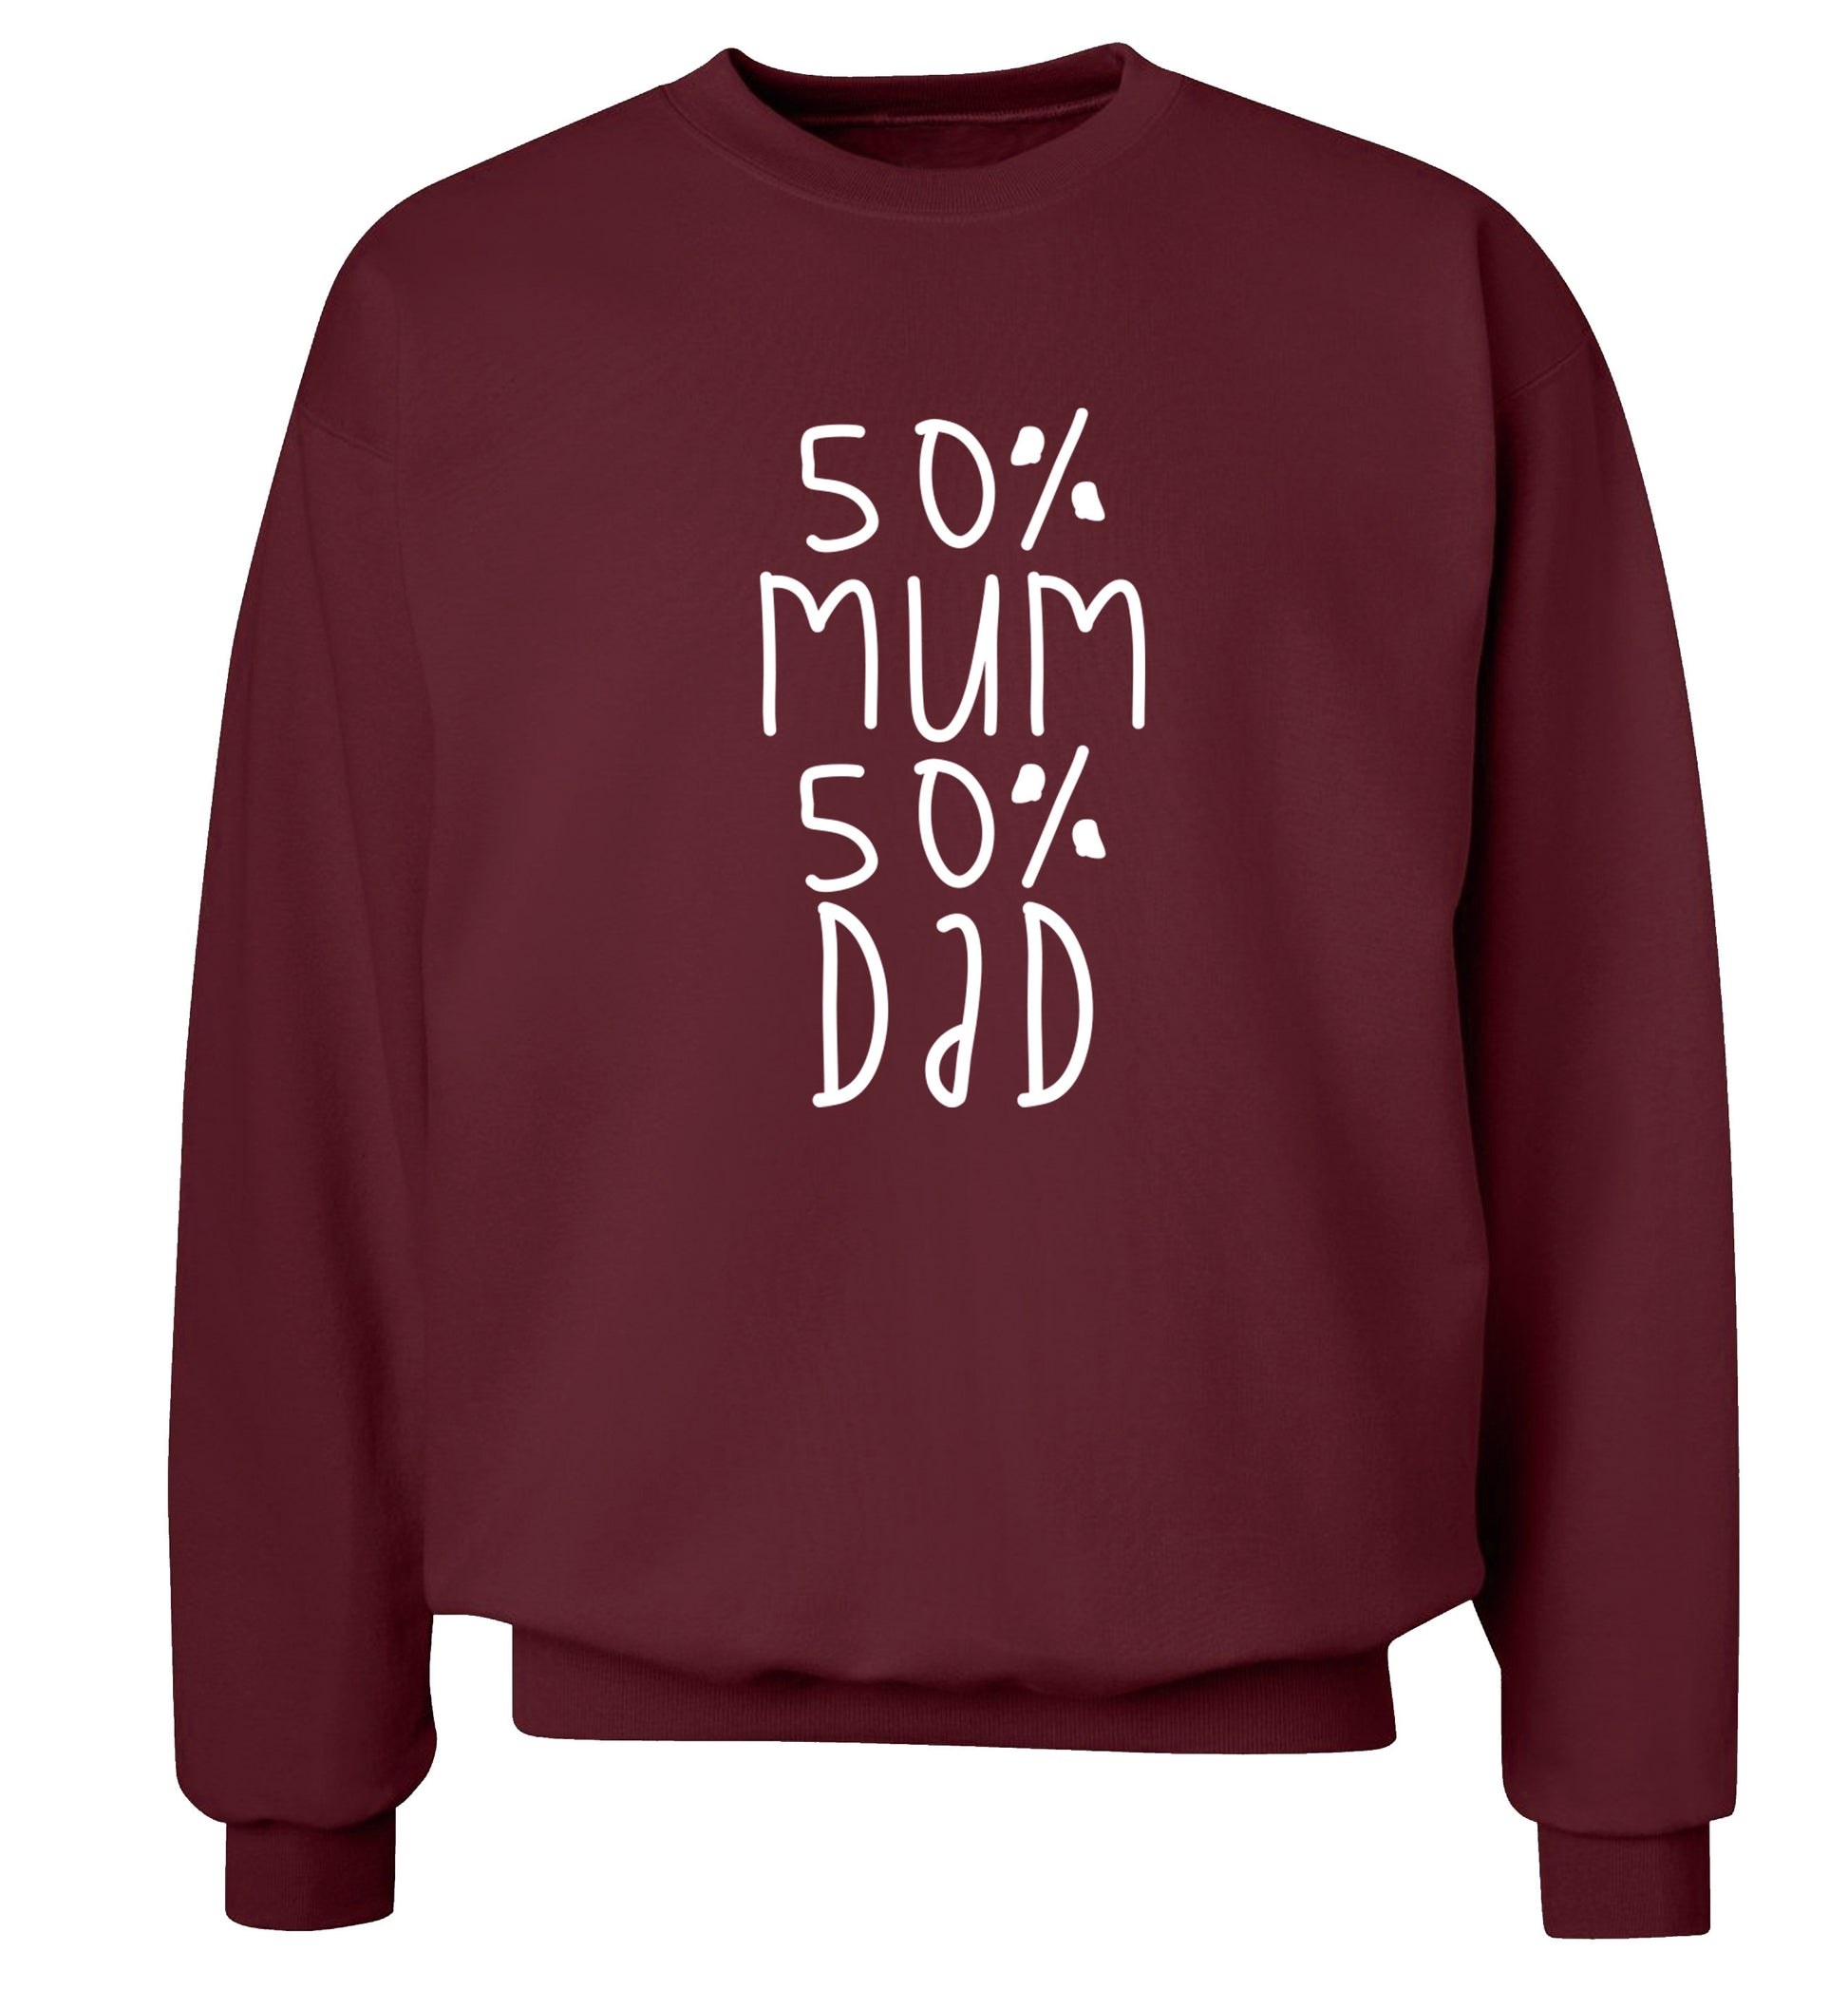 50% mum 50% dad Adult's unisex maroon Sweater 2XL